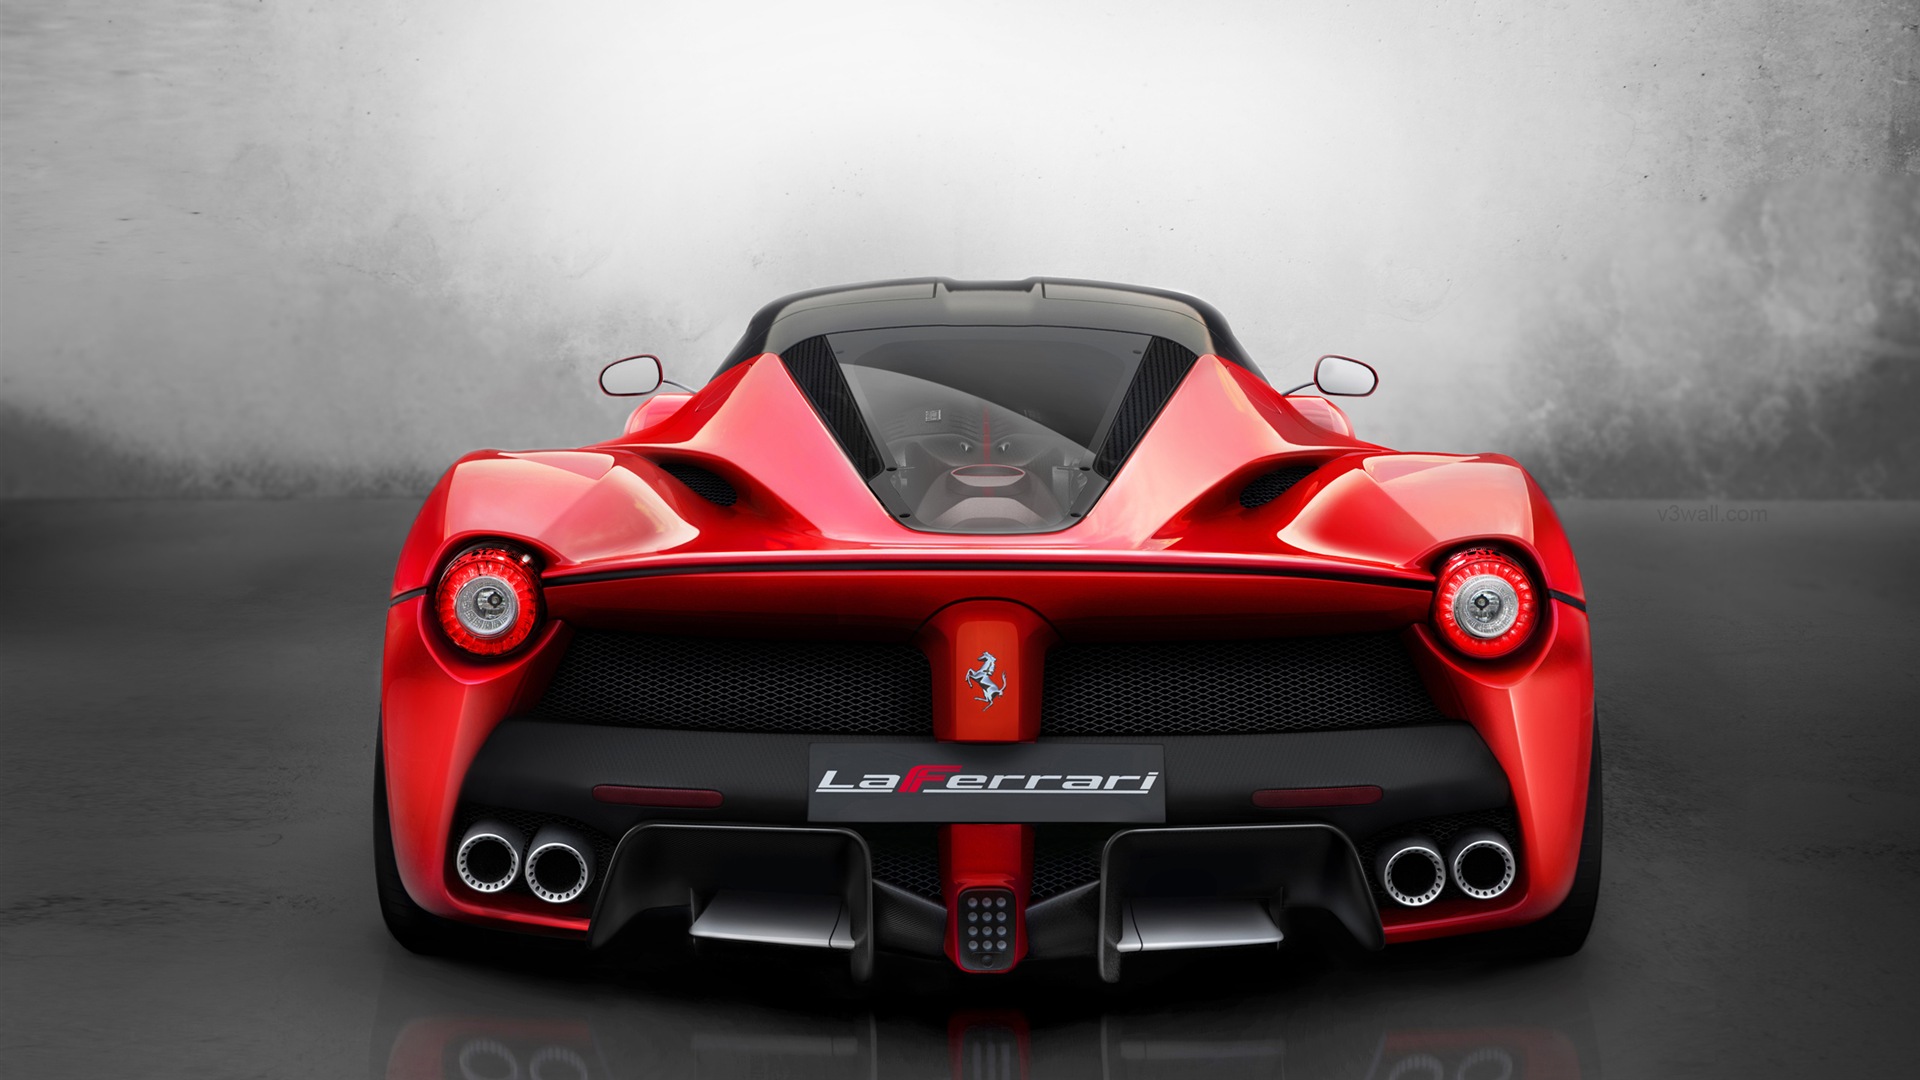 2013 Ferrari LaFerrari red supercar HD Wallpaper #5 - 1920x1080